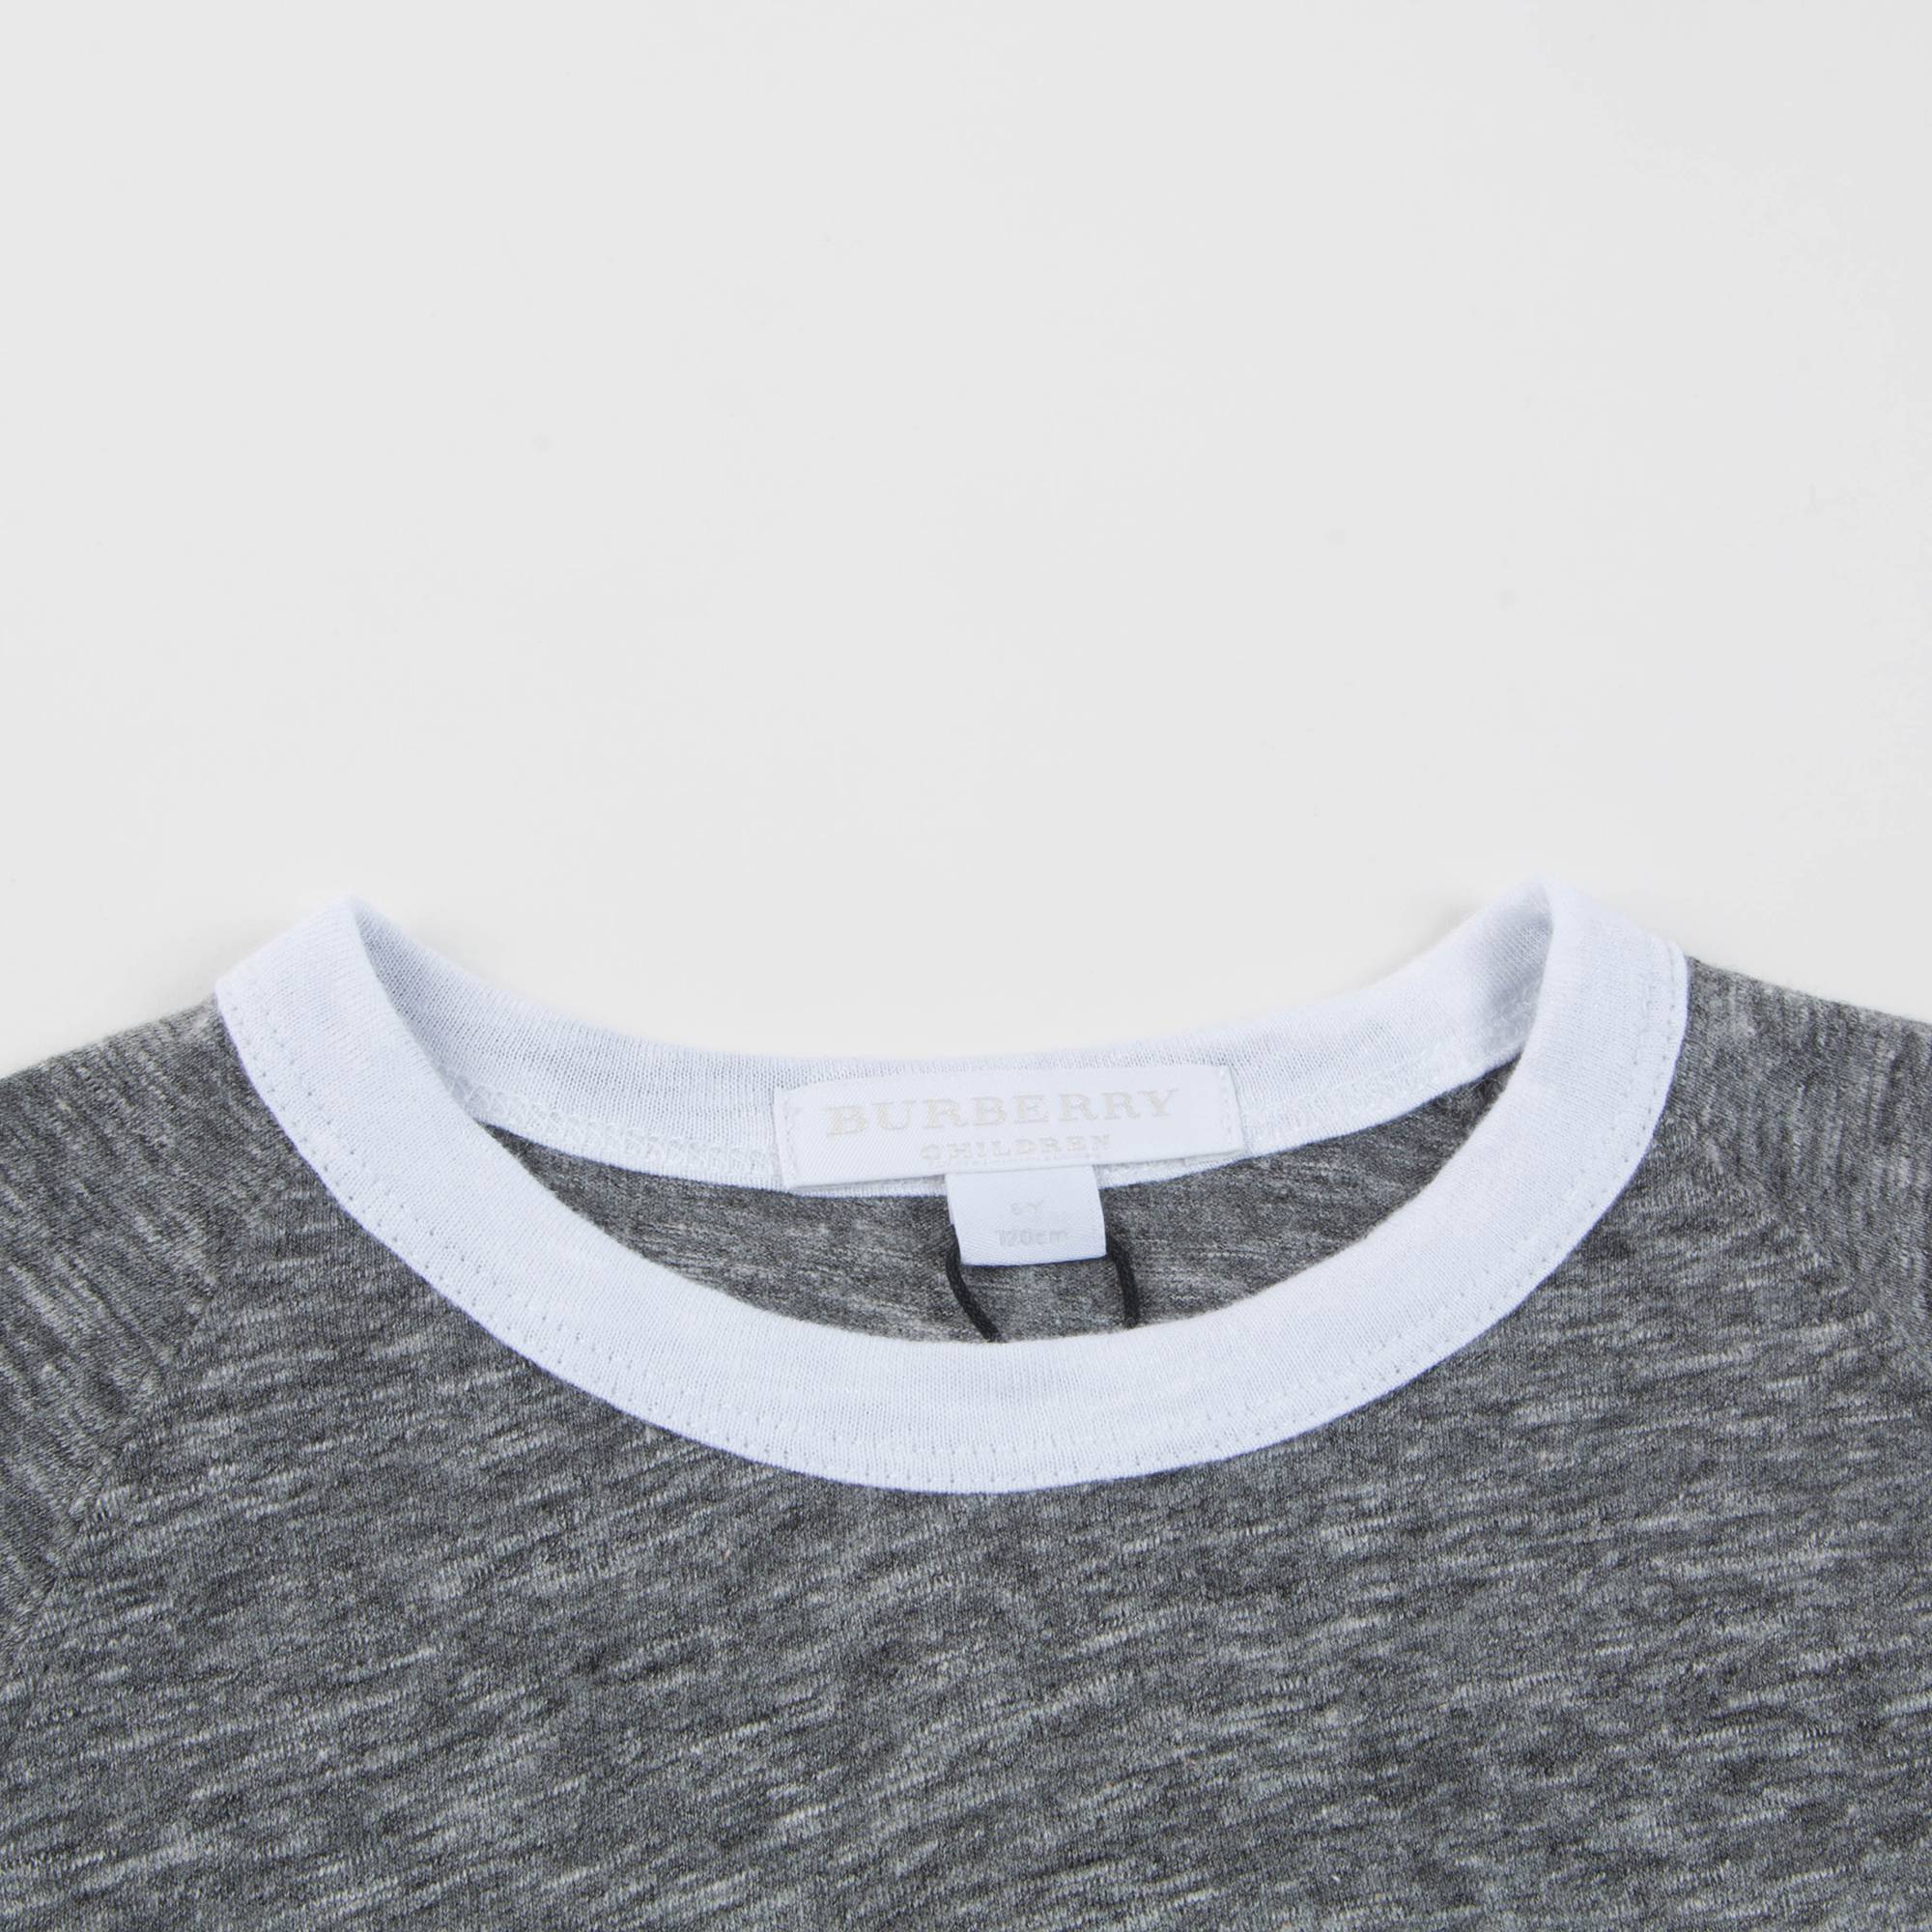 Boys Dark Grey Melange Cotton T-shirt